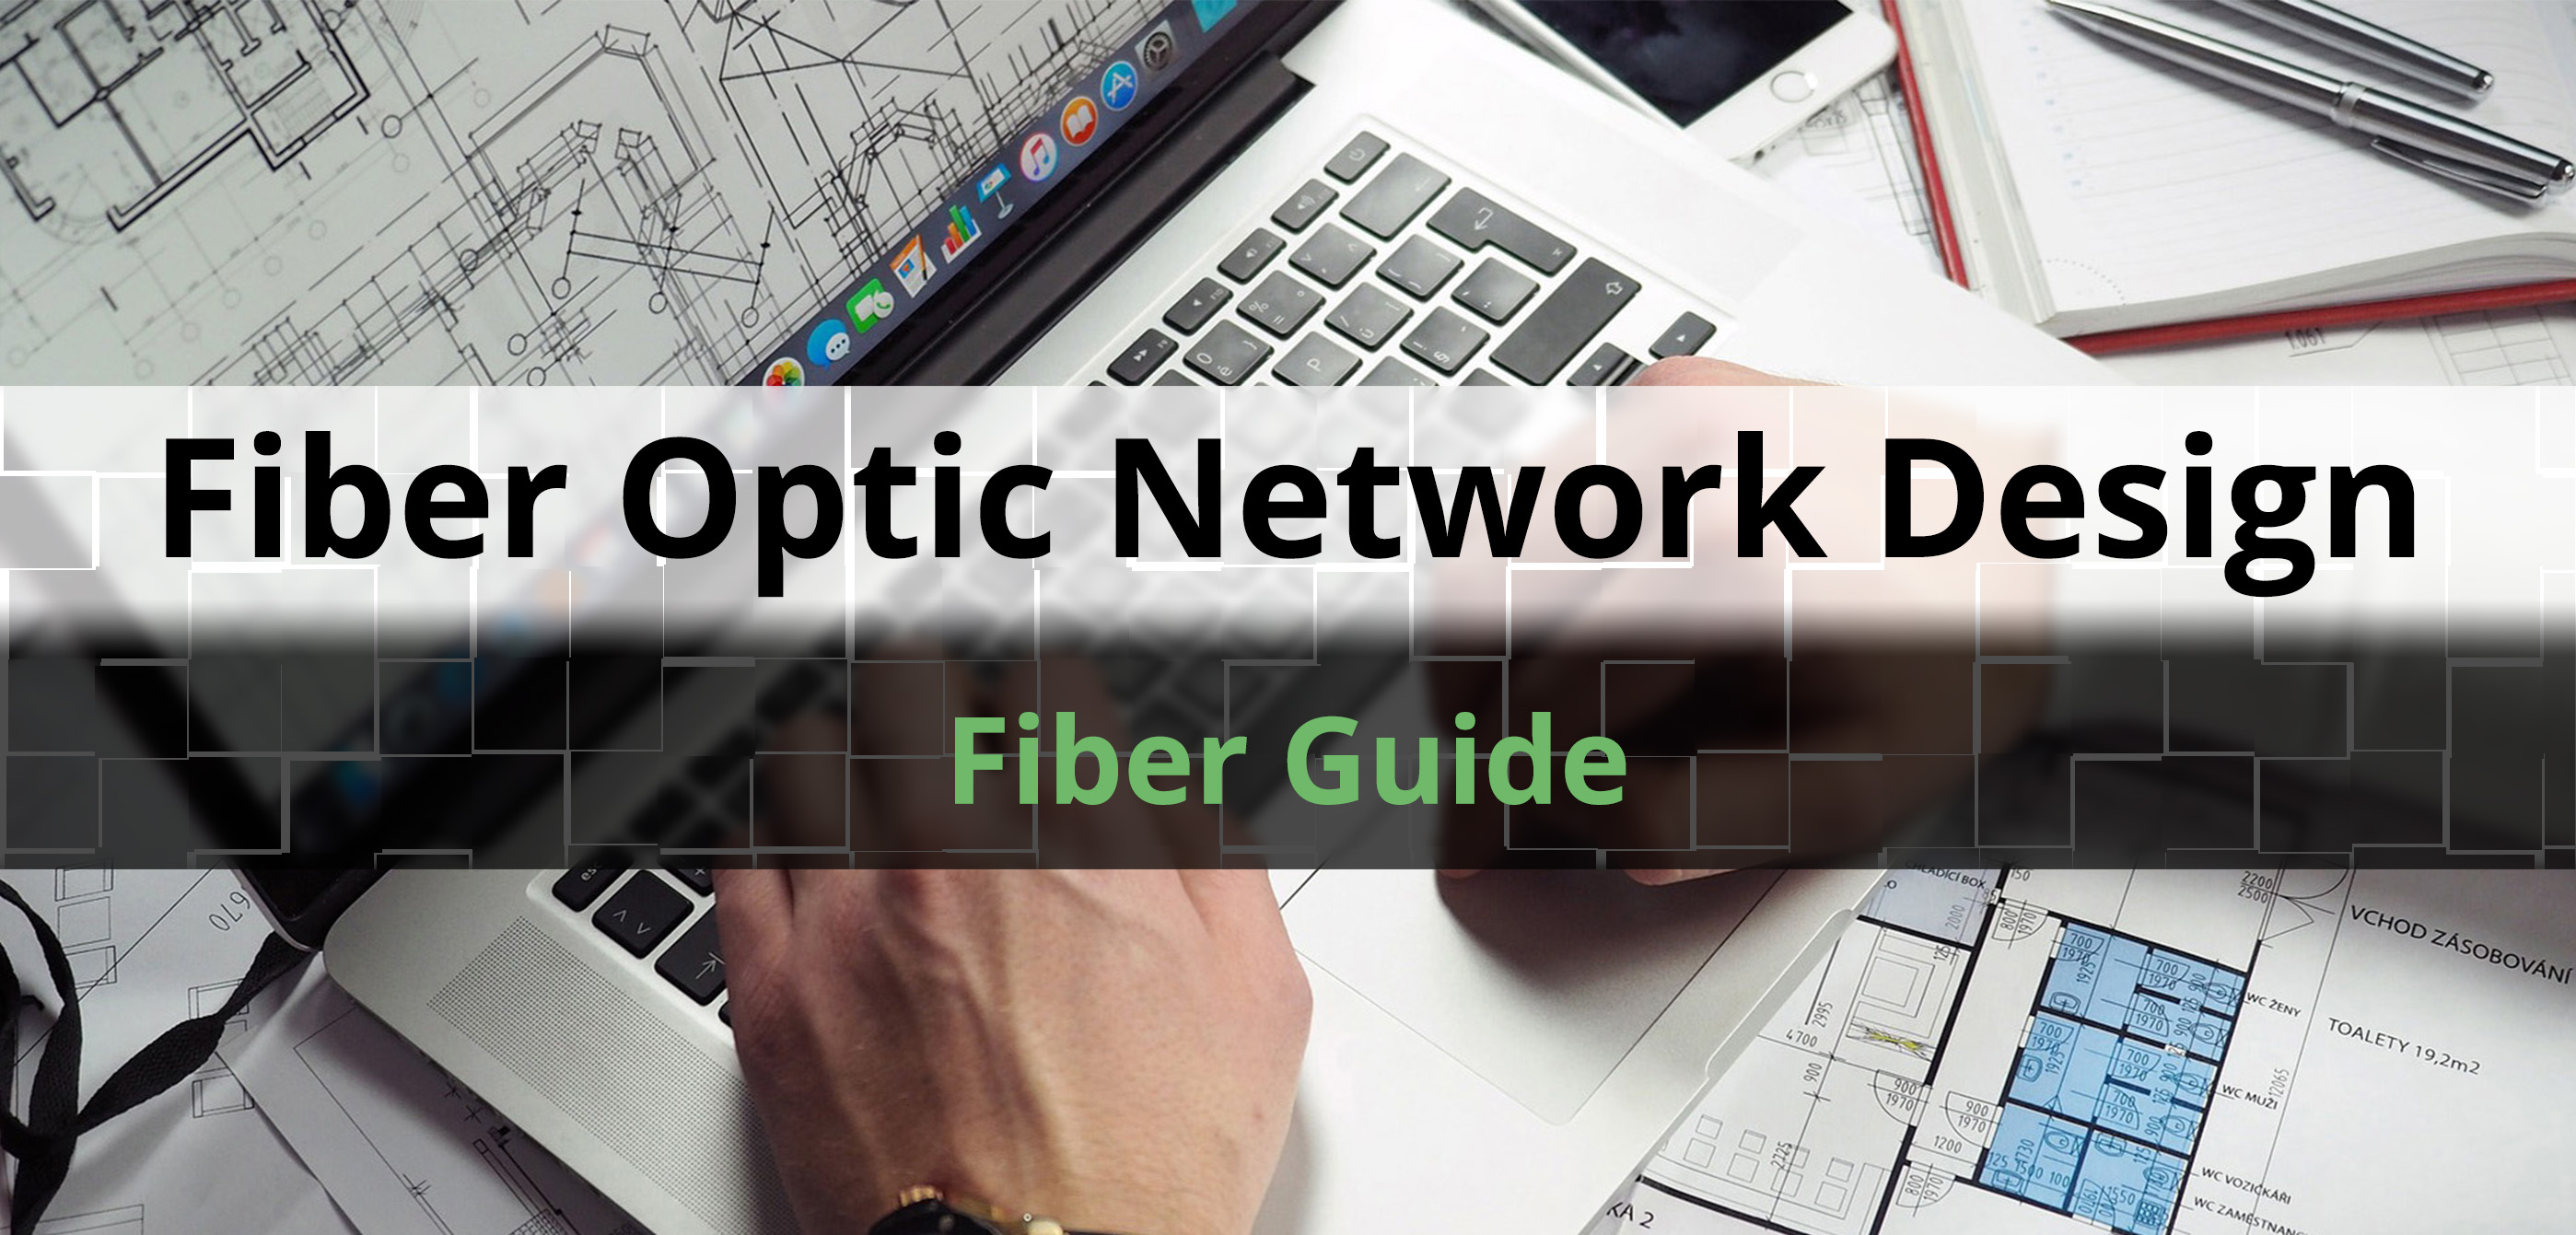 Fiber Guide_Fiber Optic Network Design_Landing page_Featured image